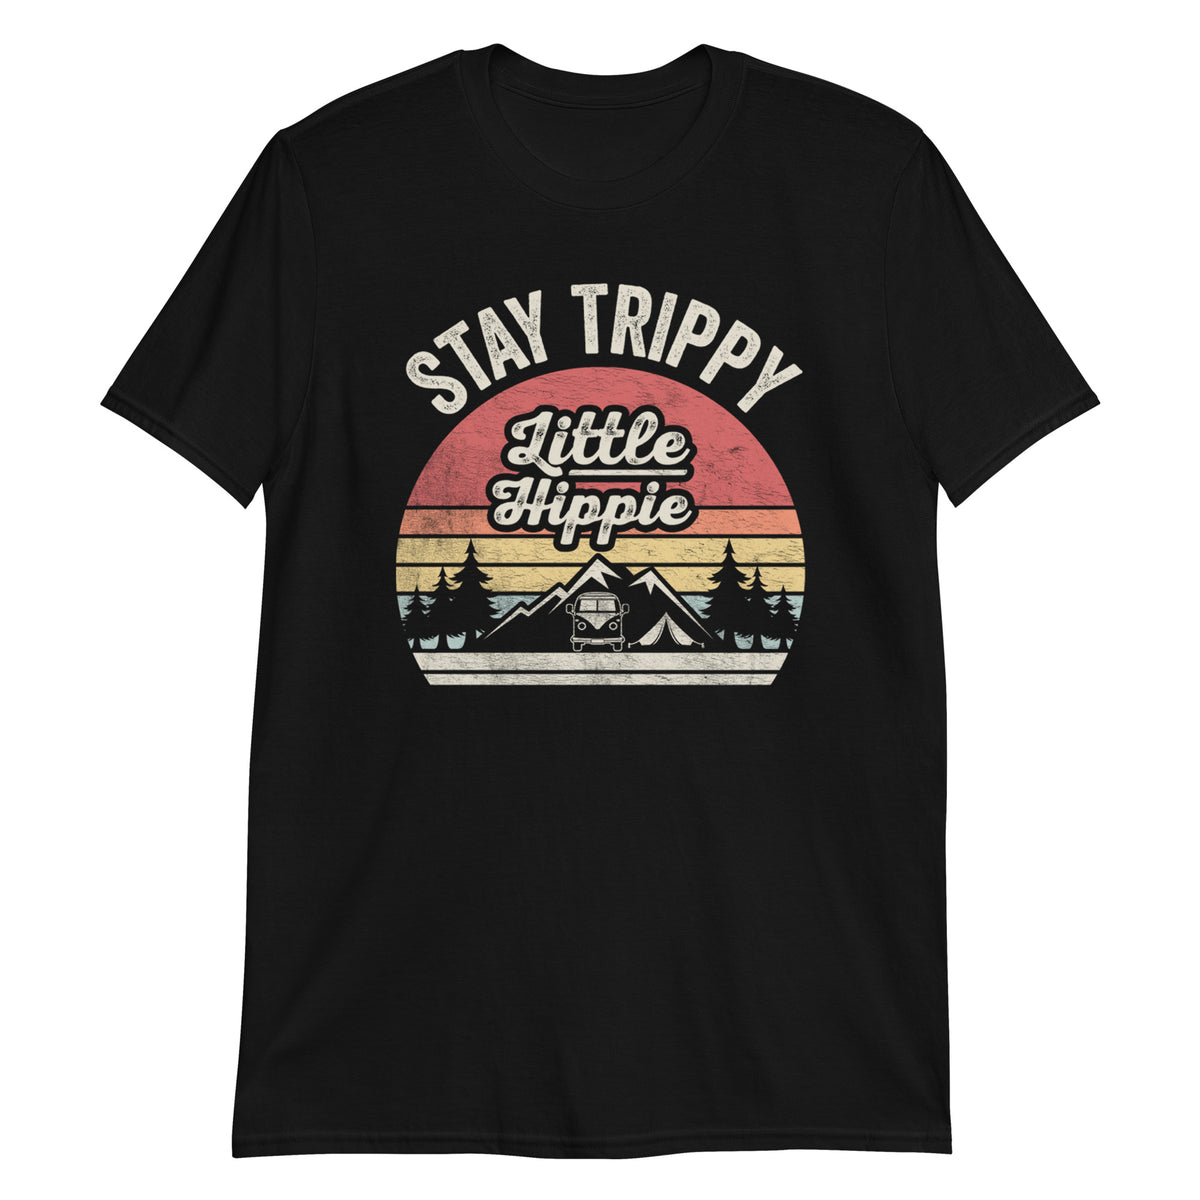 Stay Trippy Little Hippie Vintage Retro 60's 70's Hippy T-Shirt